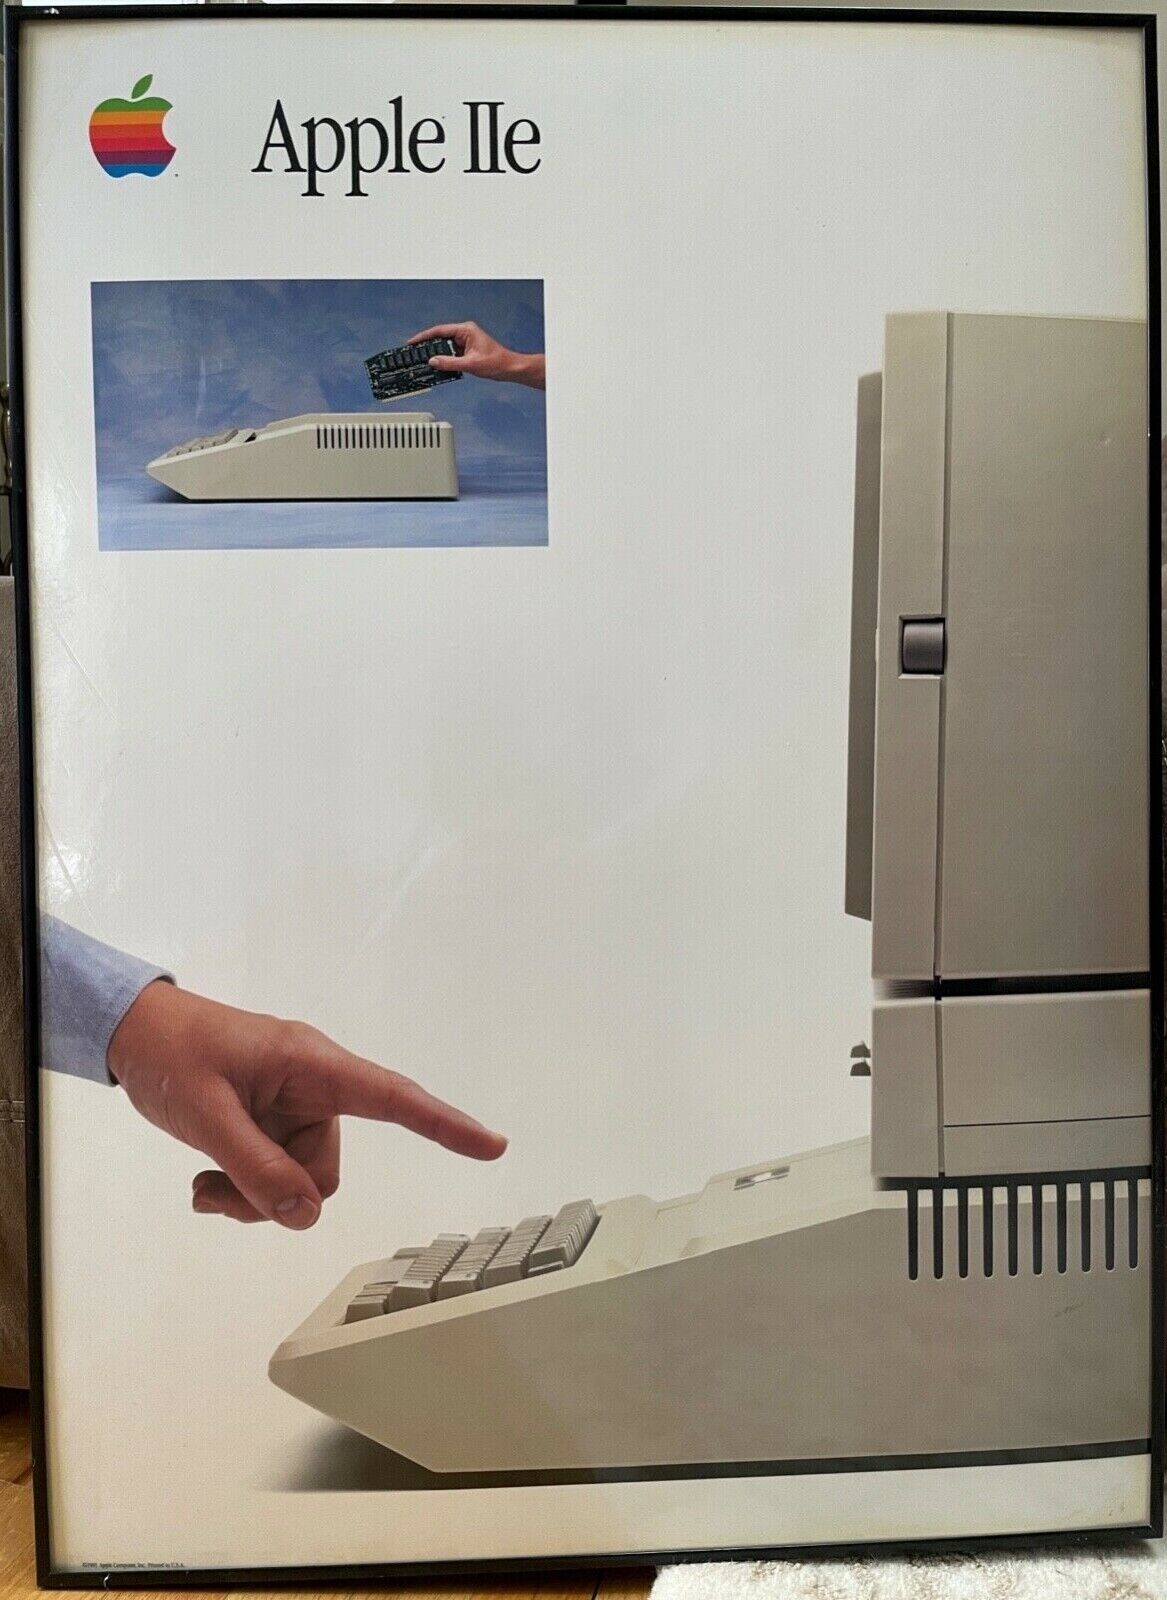 Apple IIe Computer RARE Poster 1985 - Vintage and Original Frame 30x22